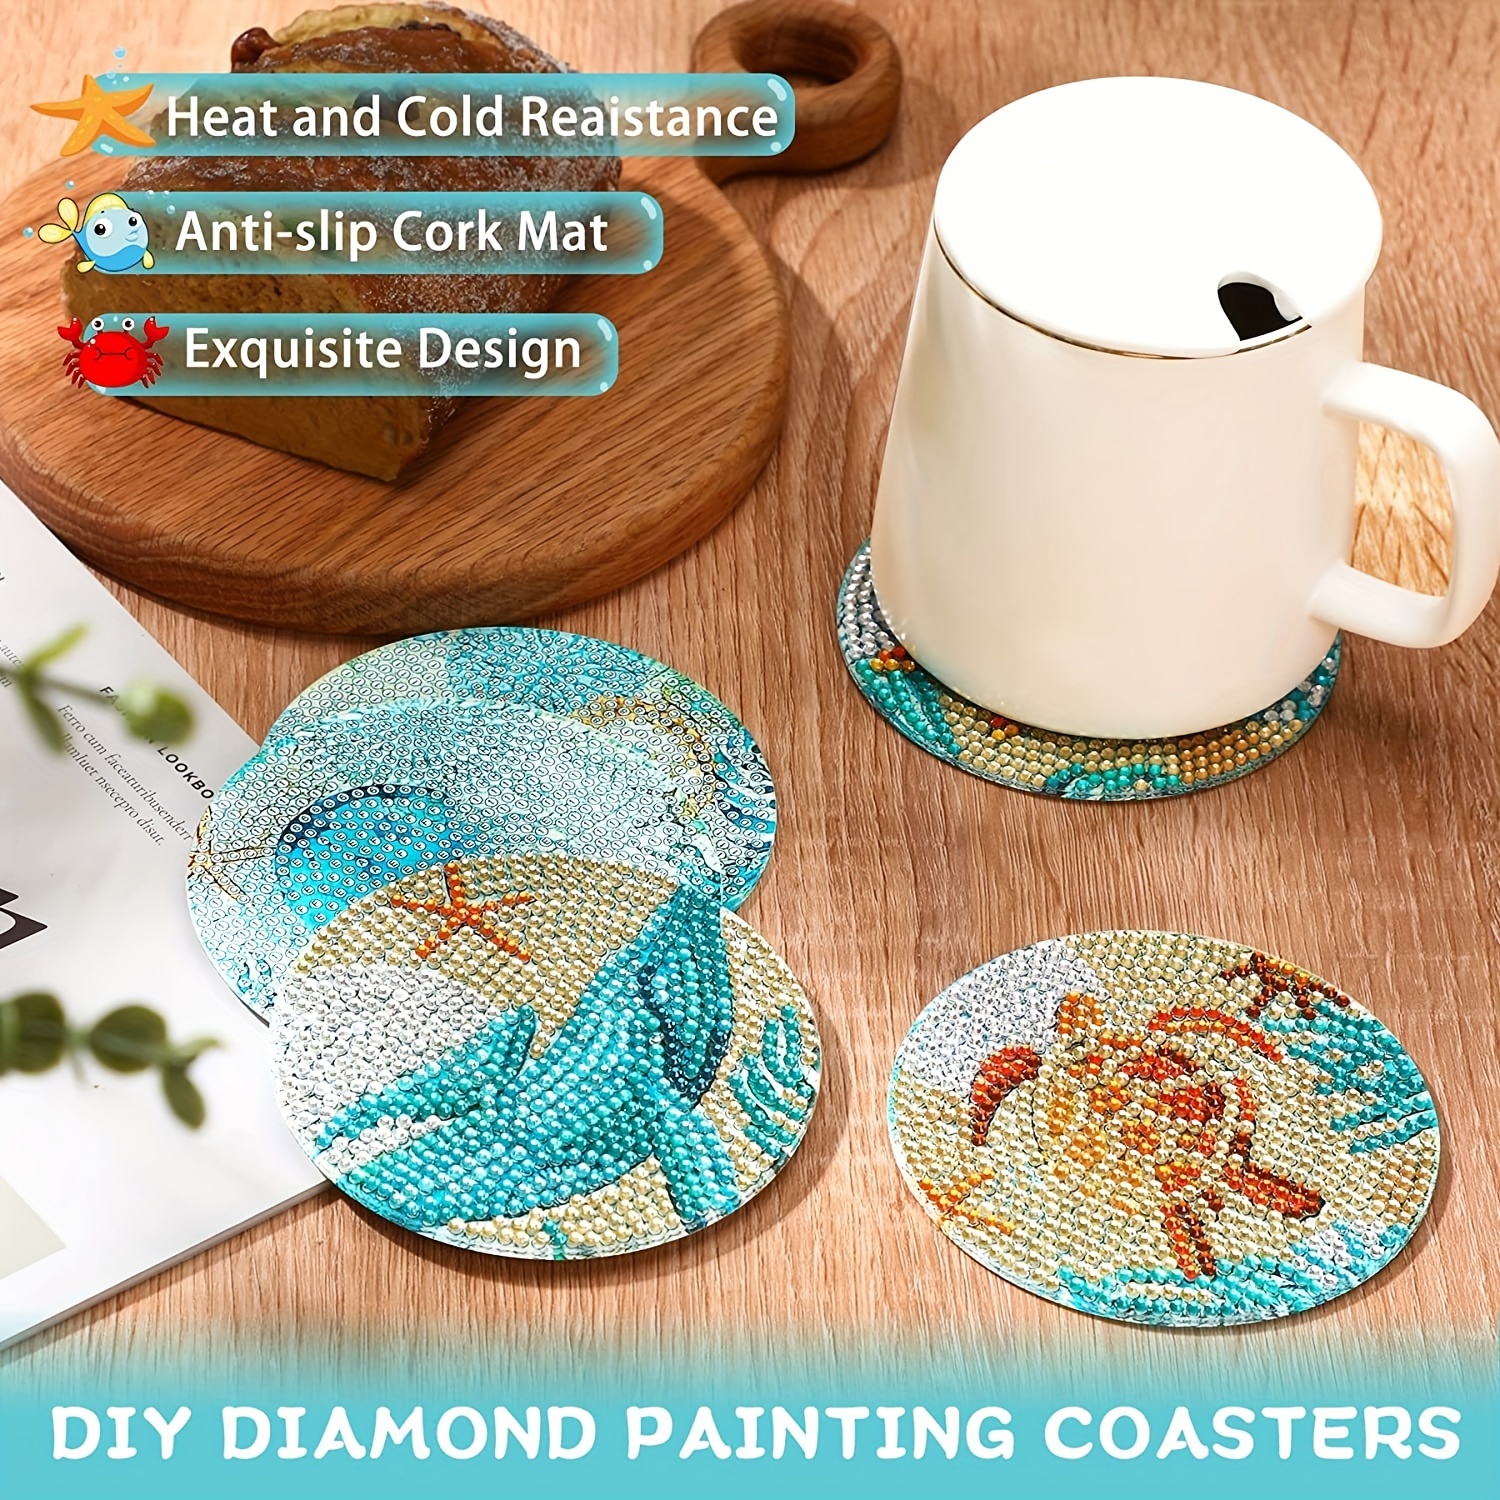  Diamond Painting Coasters, 8PCS Ocean Diamond Painting Coasters  with Holder for Drinks DIY Coaster Diamond Art Kits for Adults Kids  Beginners Diamond Art Craft Supplies